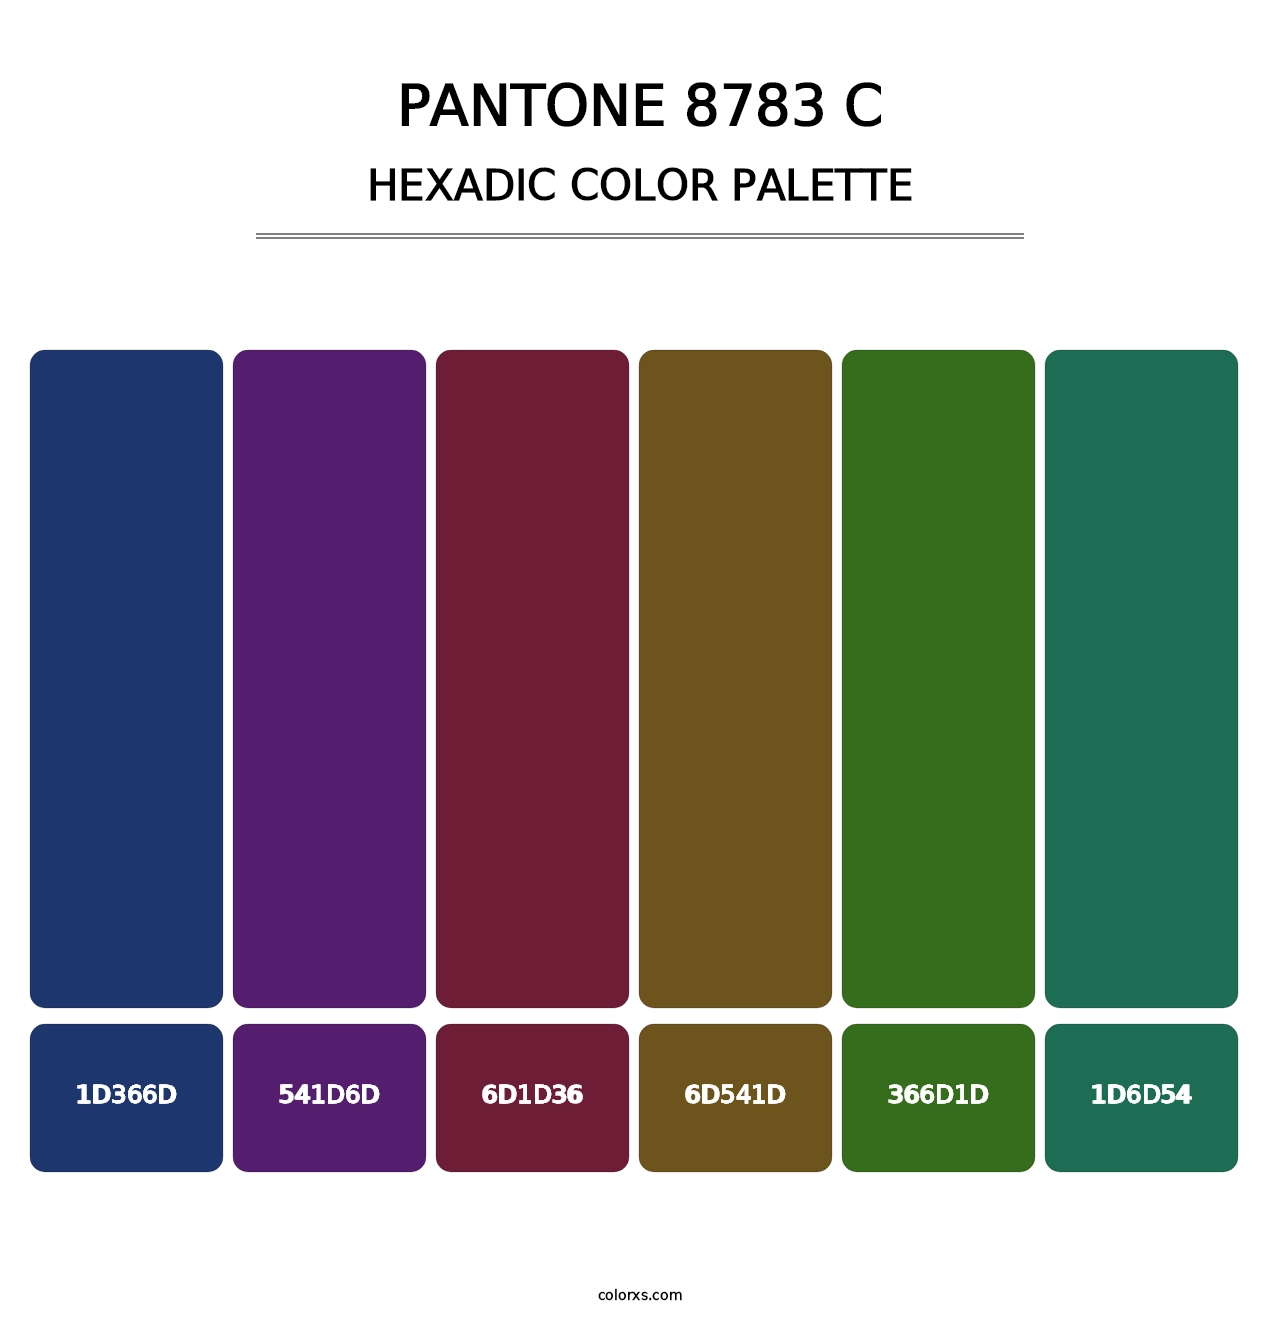 PANTONE 8783 C - Hexadic Color Palette